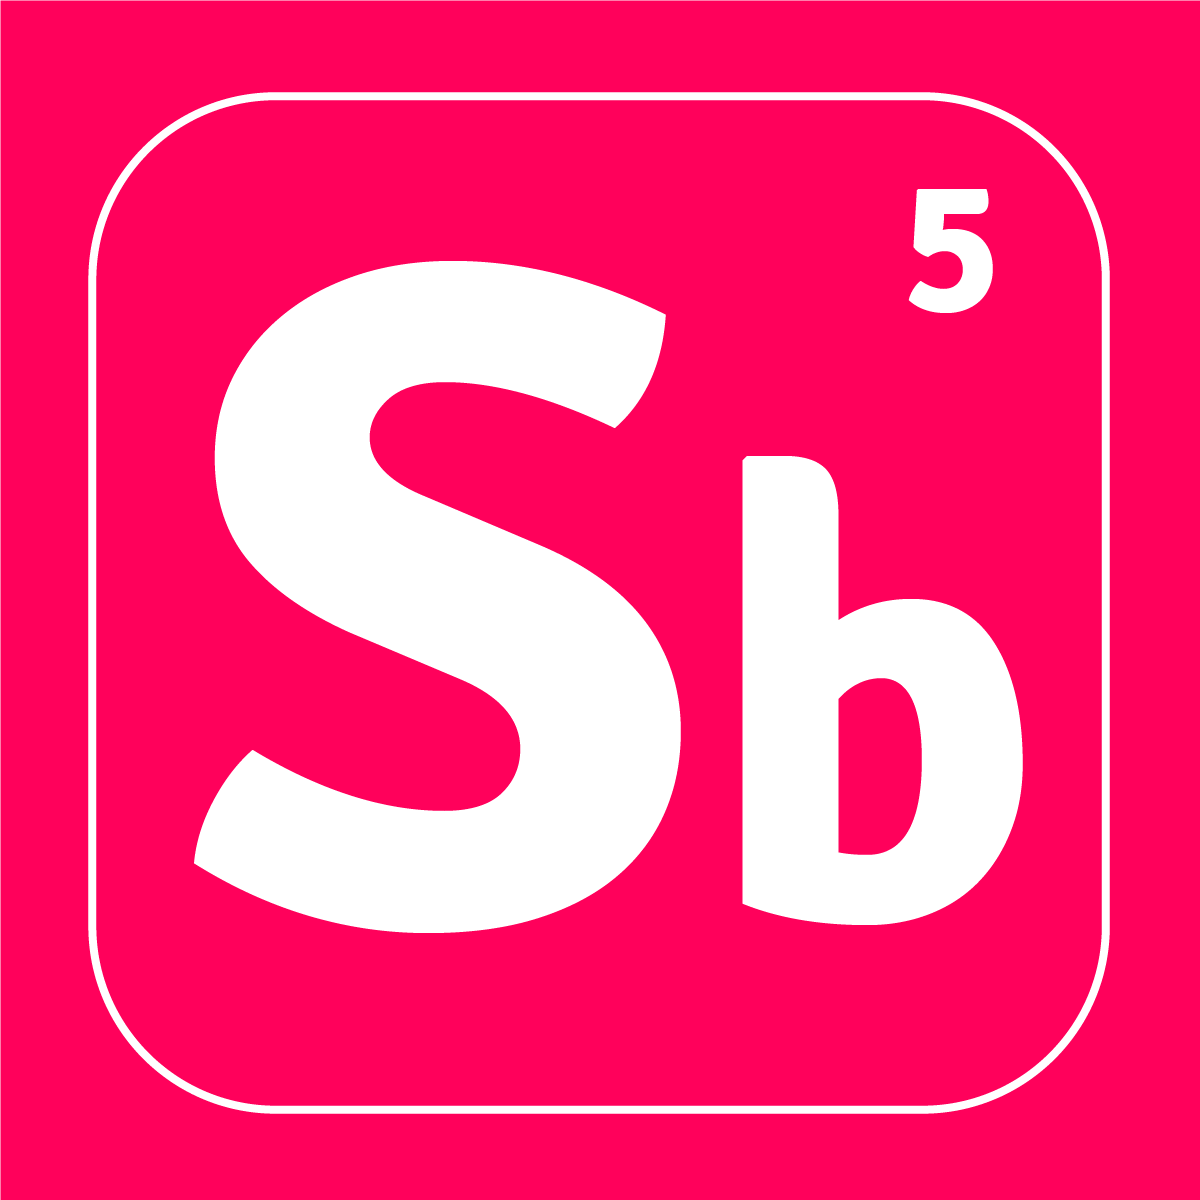 SB app by TenGrowth